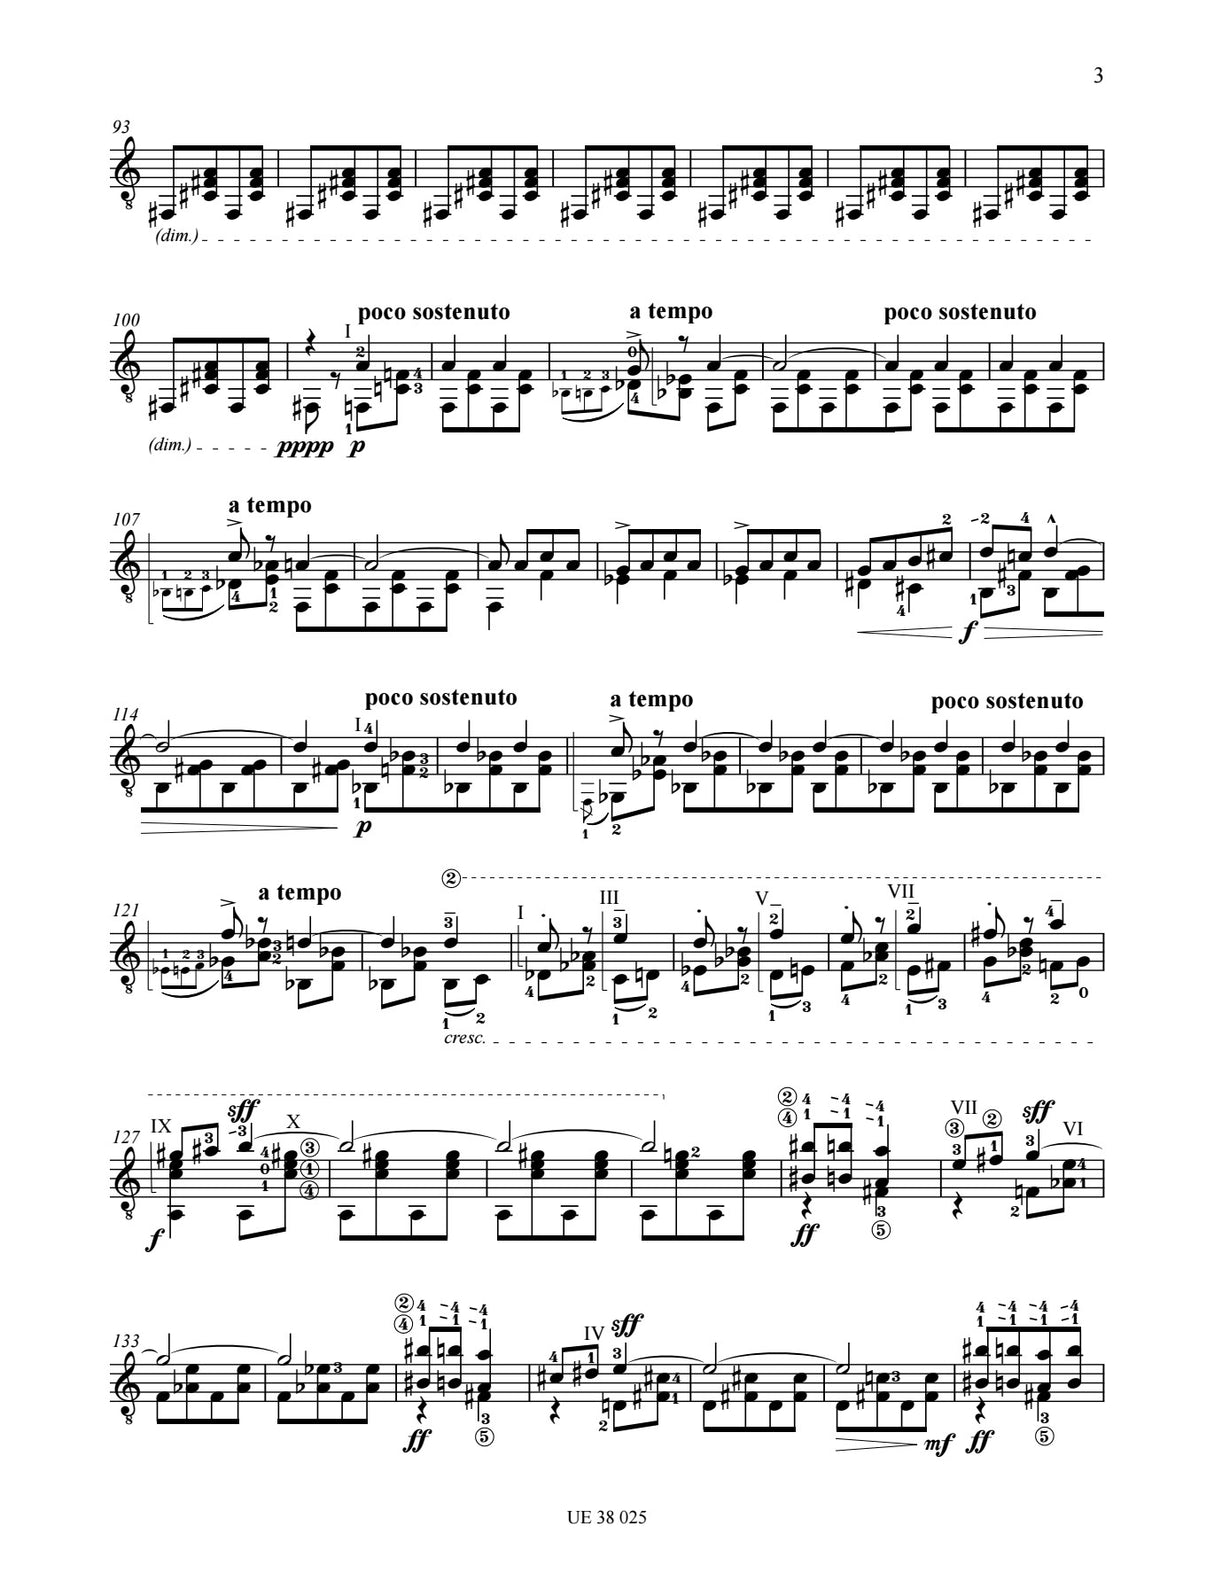 Bartók: Allegro barbaro, BB 63, Sz. 49 (arr. for guitar)